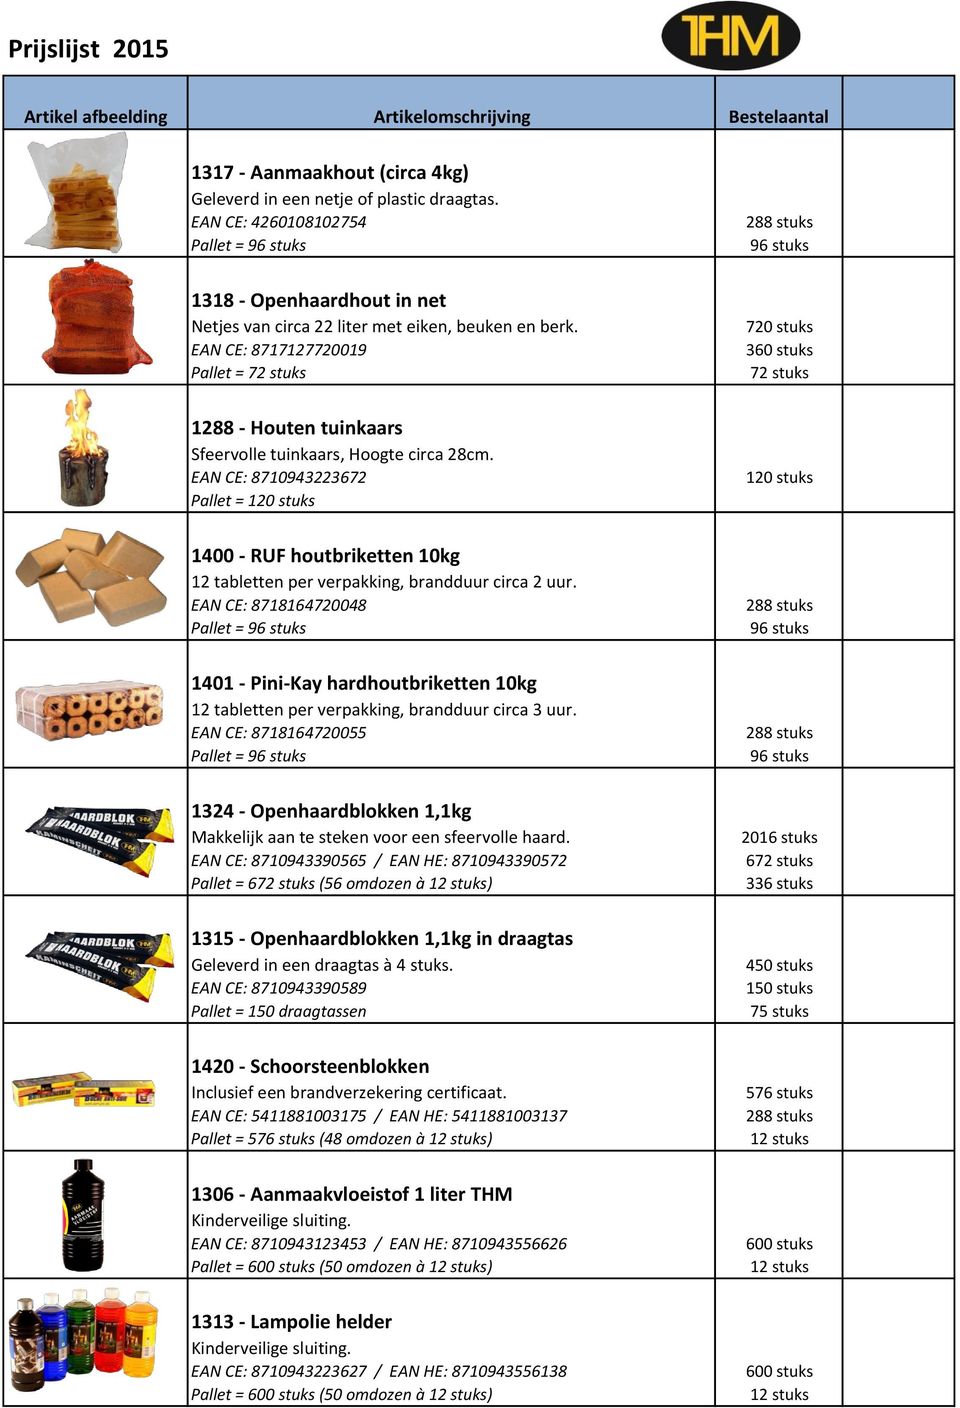 EAN CE: 8710943223672 Pallet = 1400 - RUF houtbriketten 10kg 12 tabletten per verpakking, brandduur circa 2 uur.